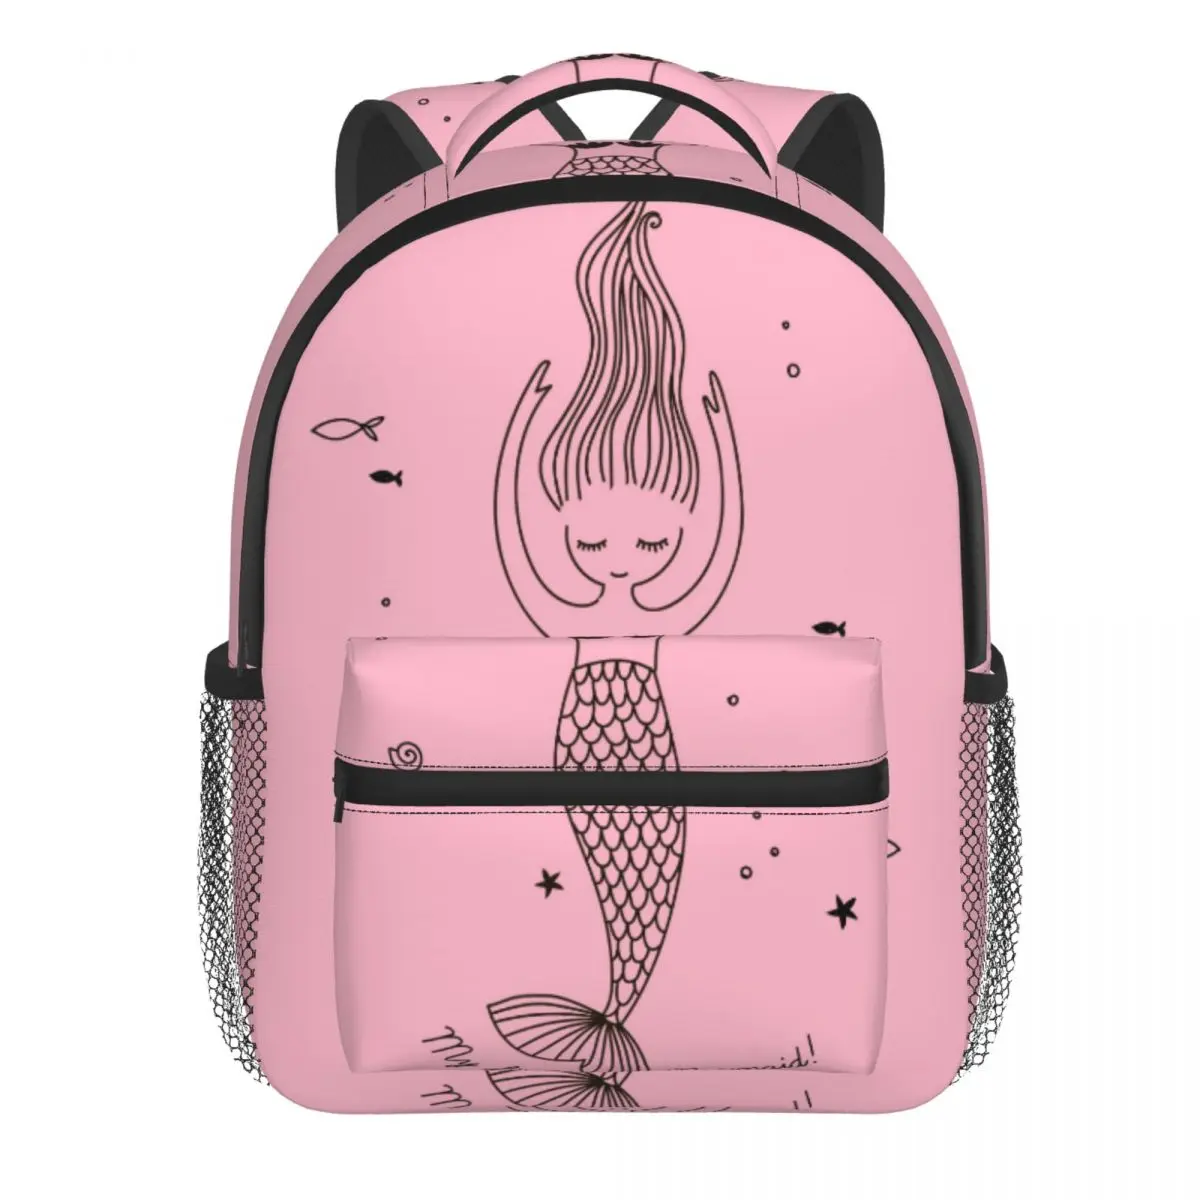 Little Cute Mermaid Illustration Baby Backpack Kindergarten Schoolbag Kids Children School Bag